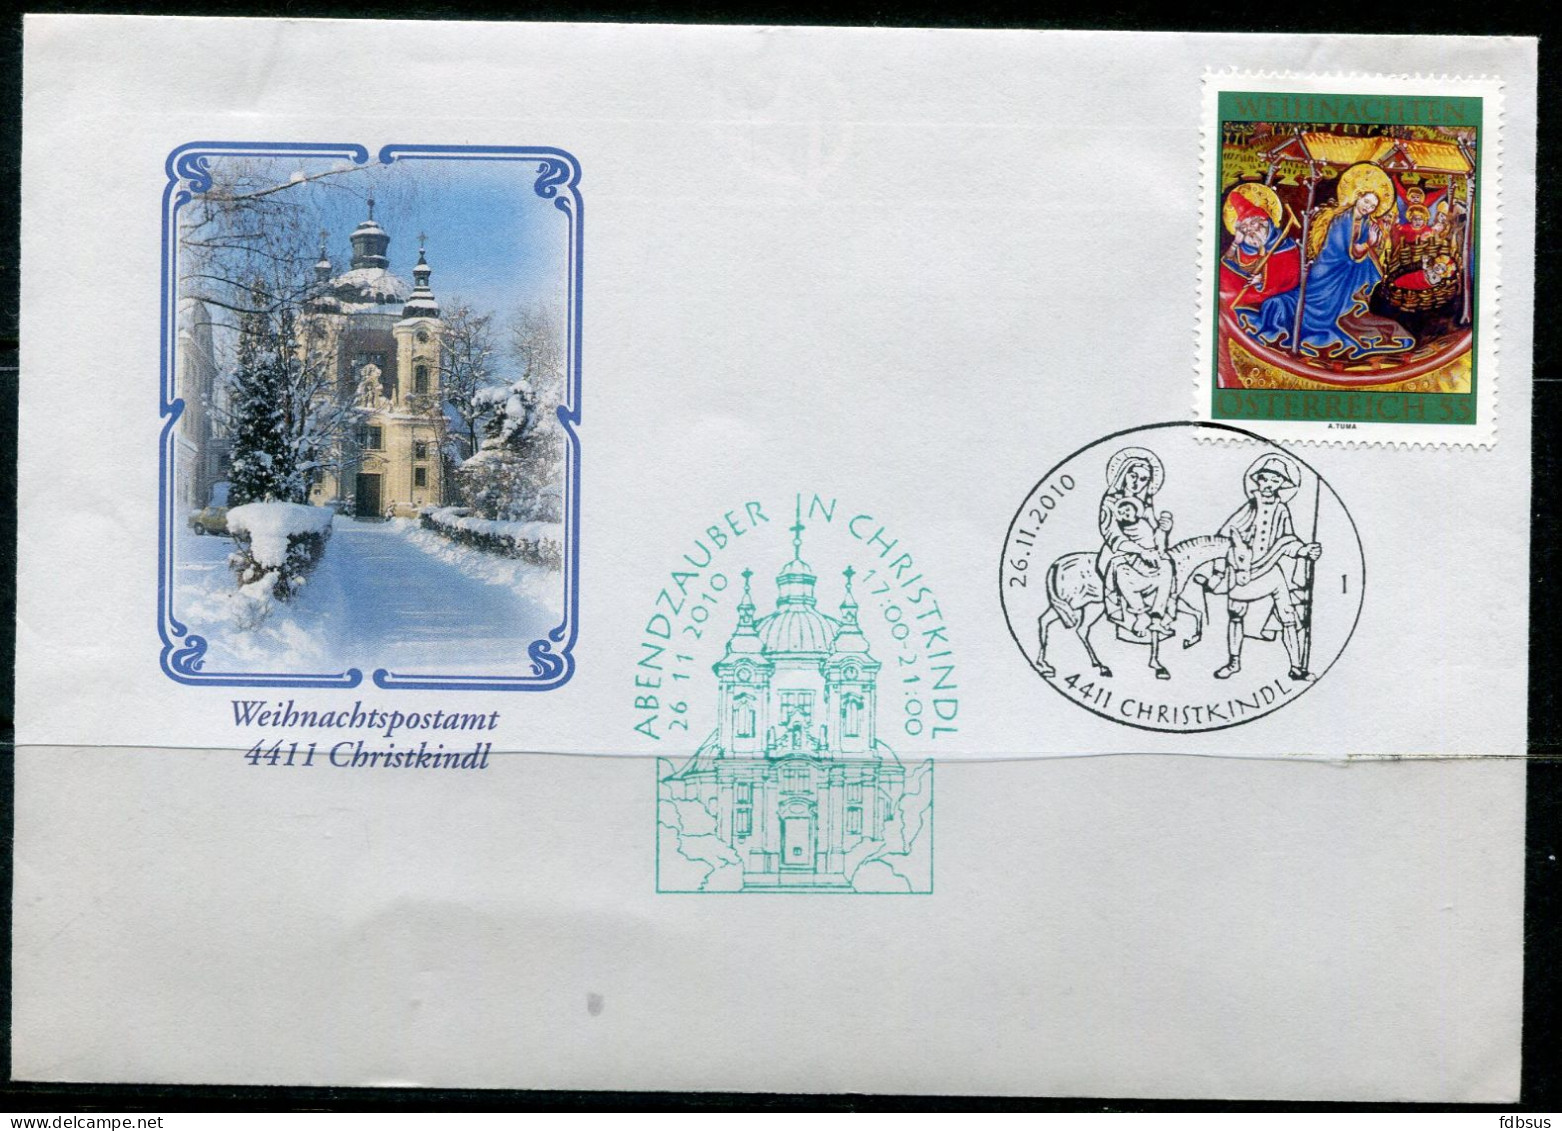 26-11-2010 Christkindl Cover Noel Christmas Navidad Weihnachten - See Sonderstempel And Briefmarken - - Storia Postale